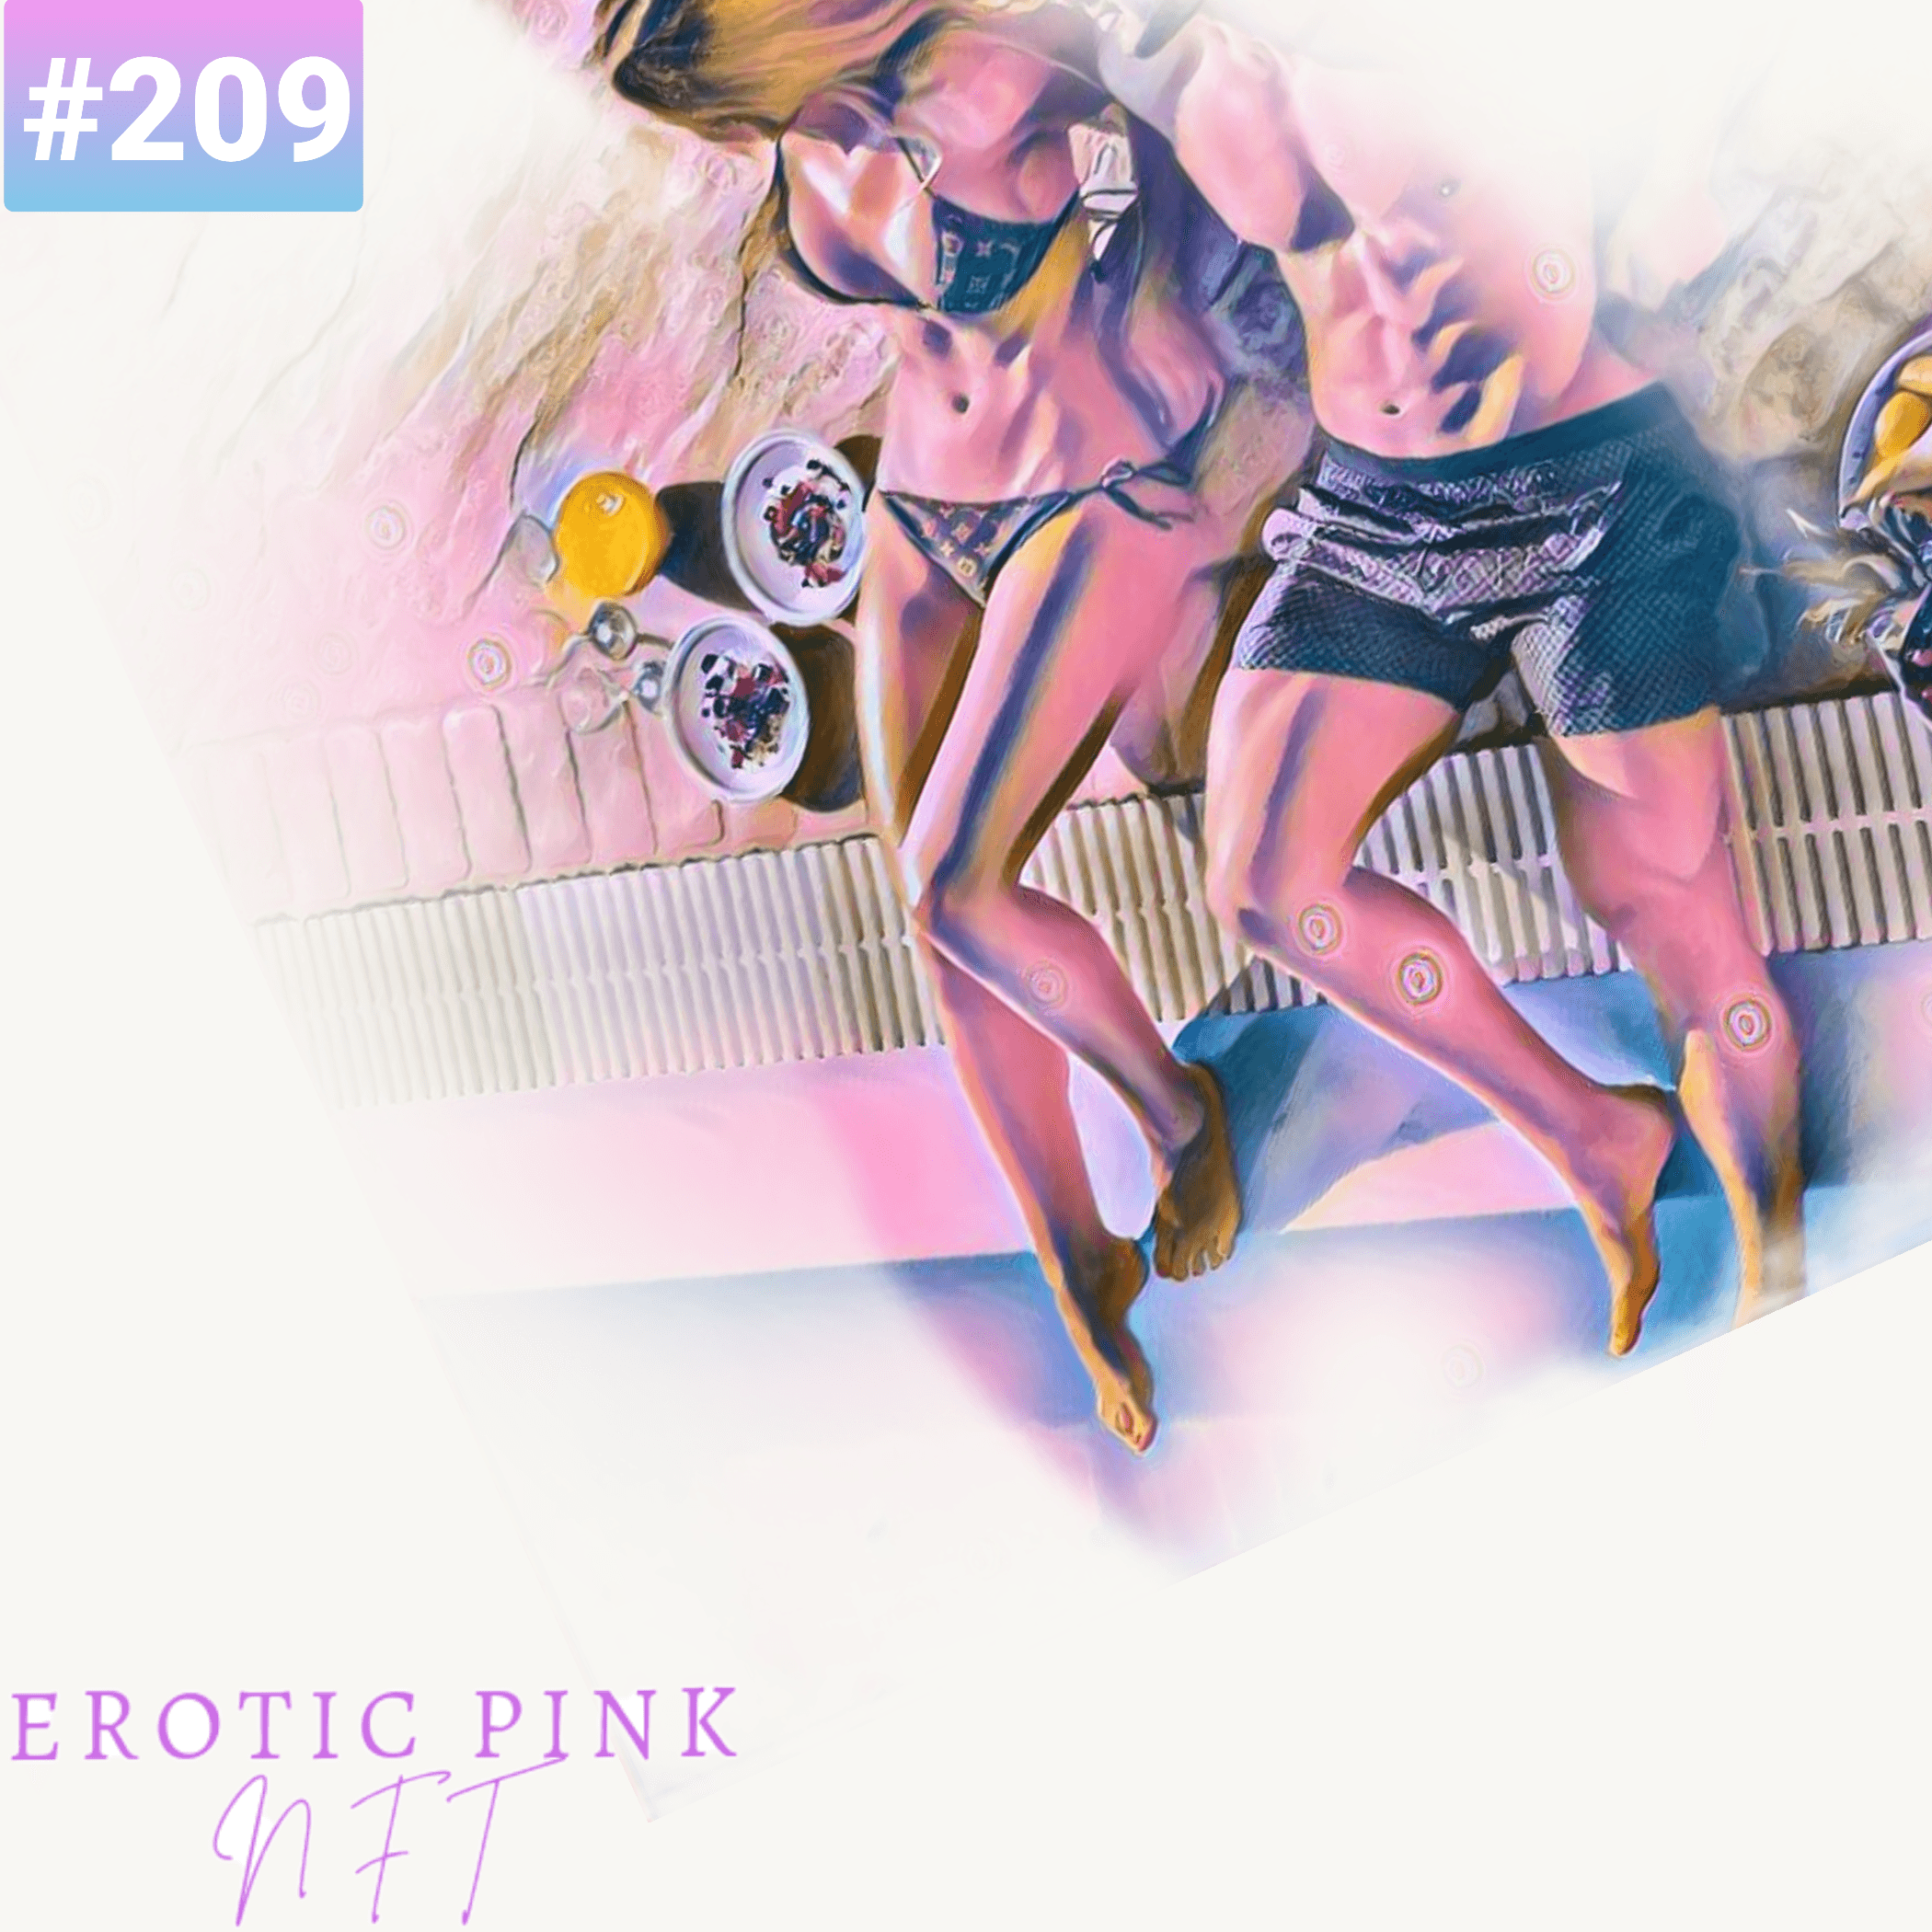 Erotic Pink #209